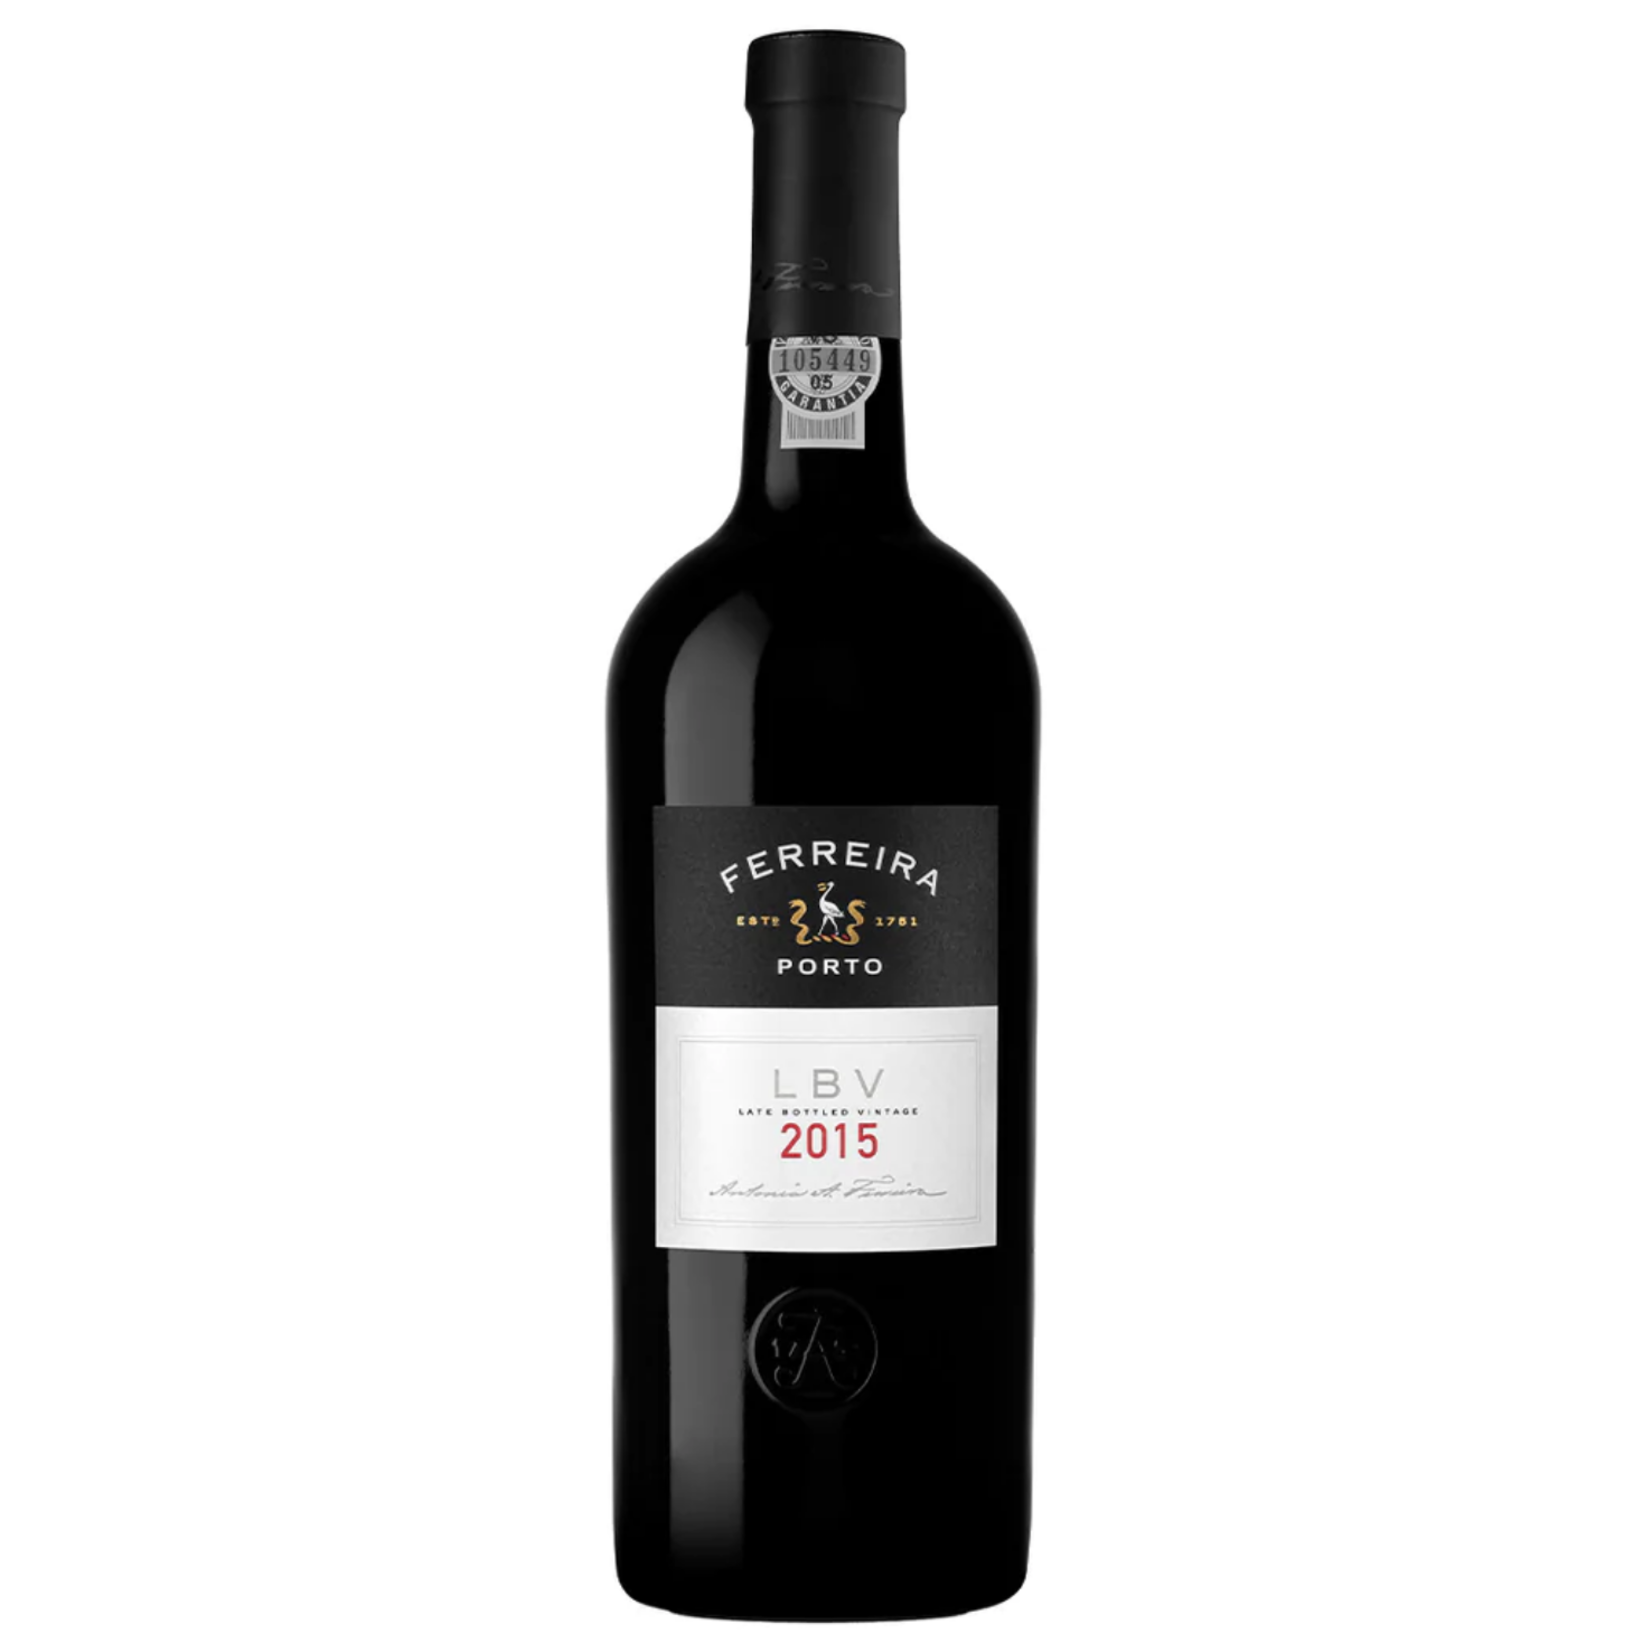 2015, Ferreira LBV (Late Bottled Vintage 19), Douro Valley, Oporto, Portugal, 20% Alc., NR